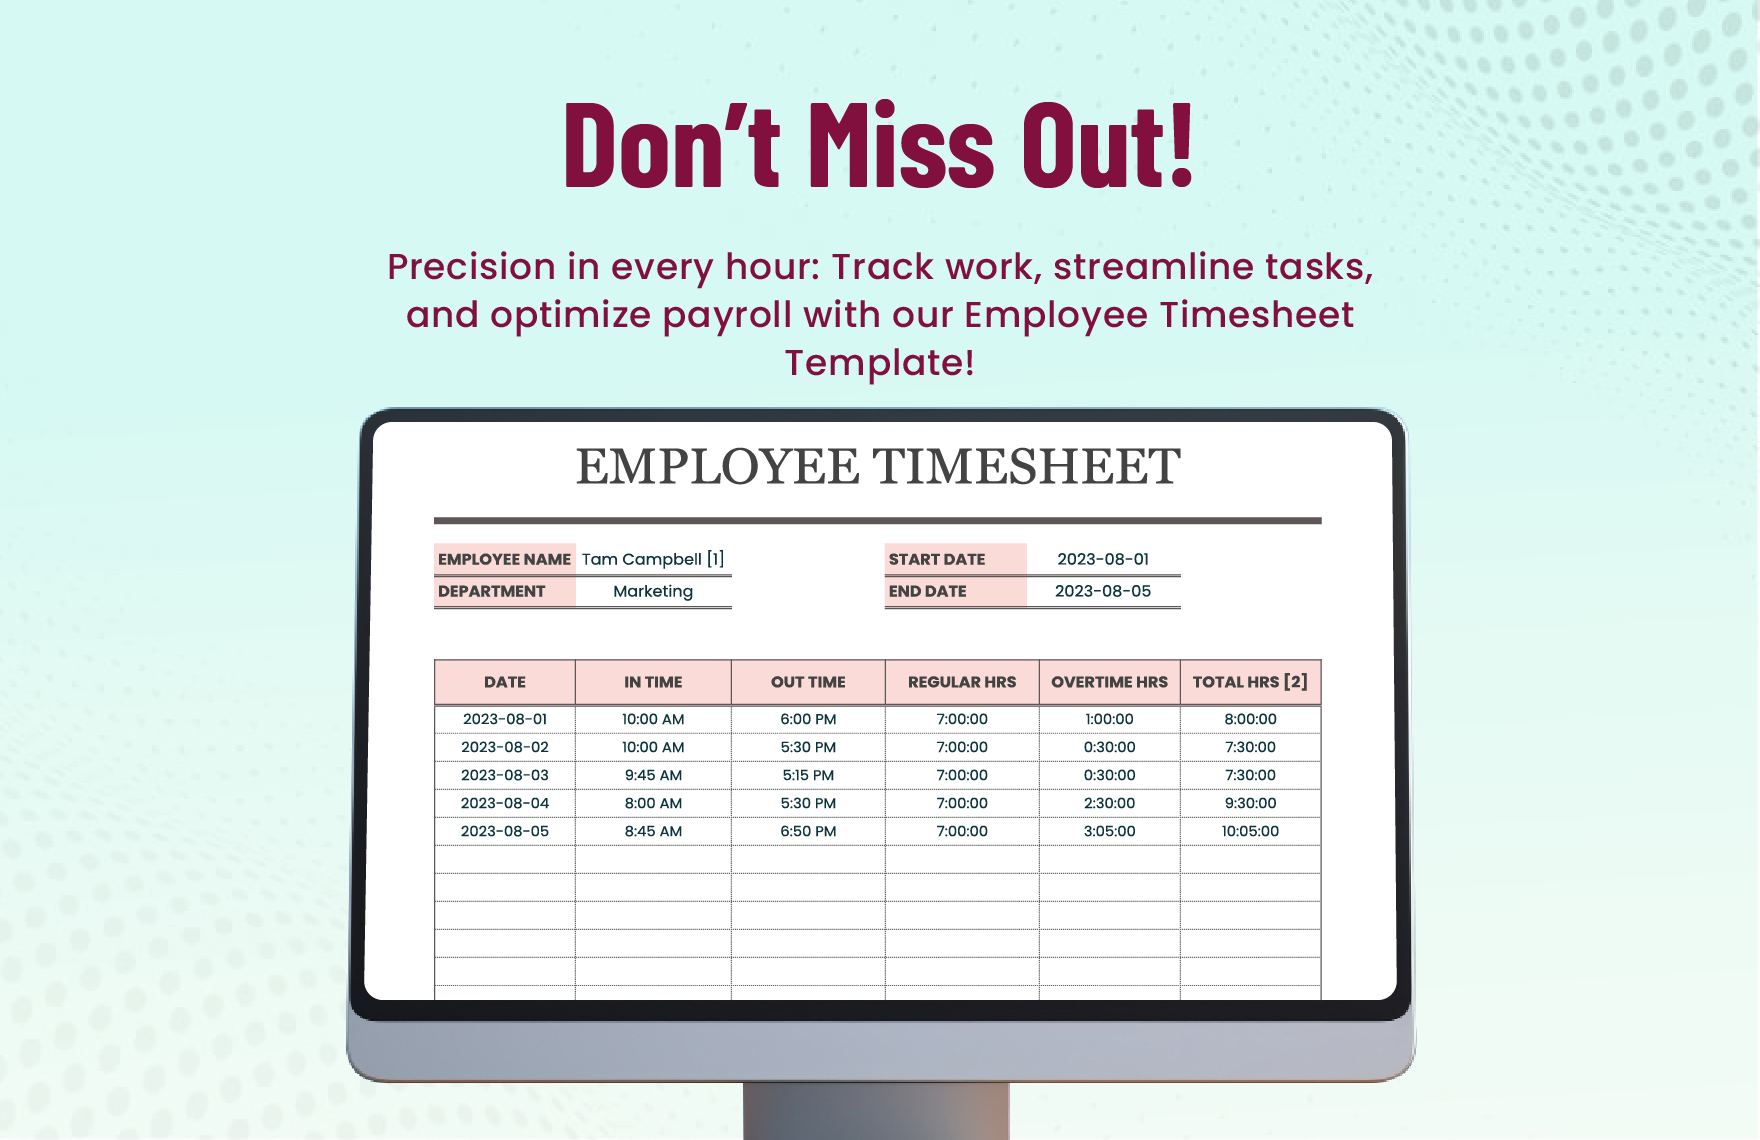 Employee Timesheet Template